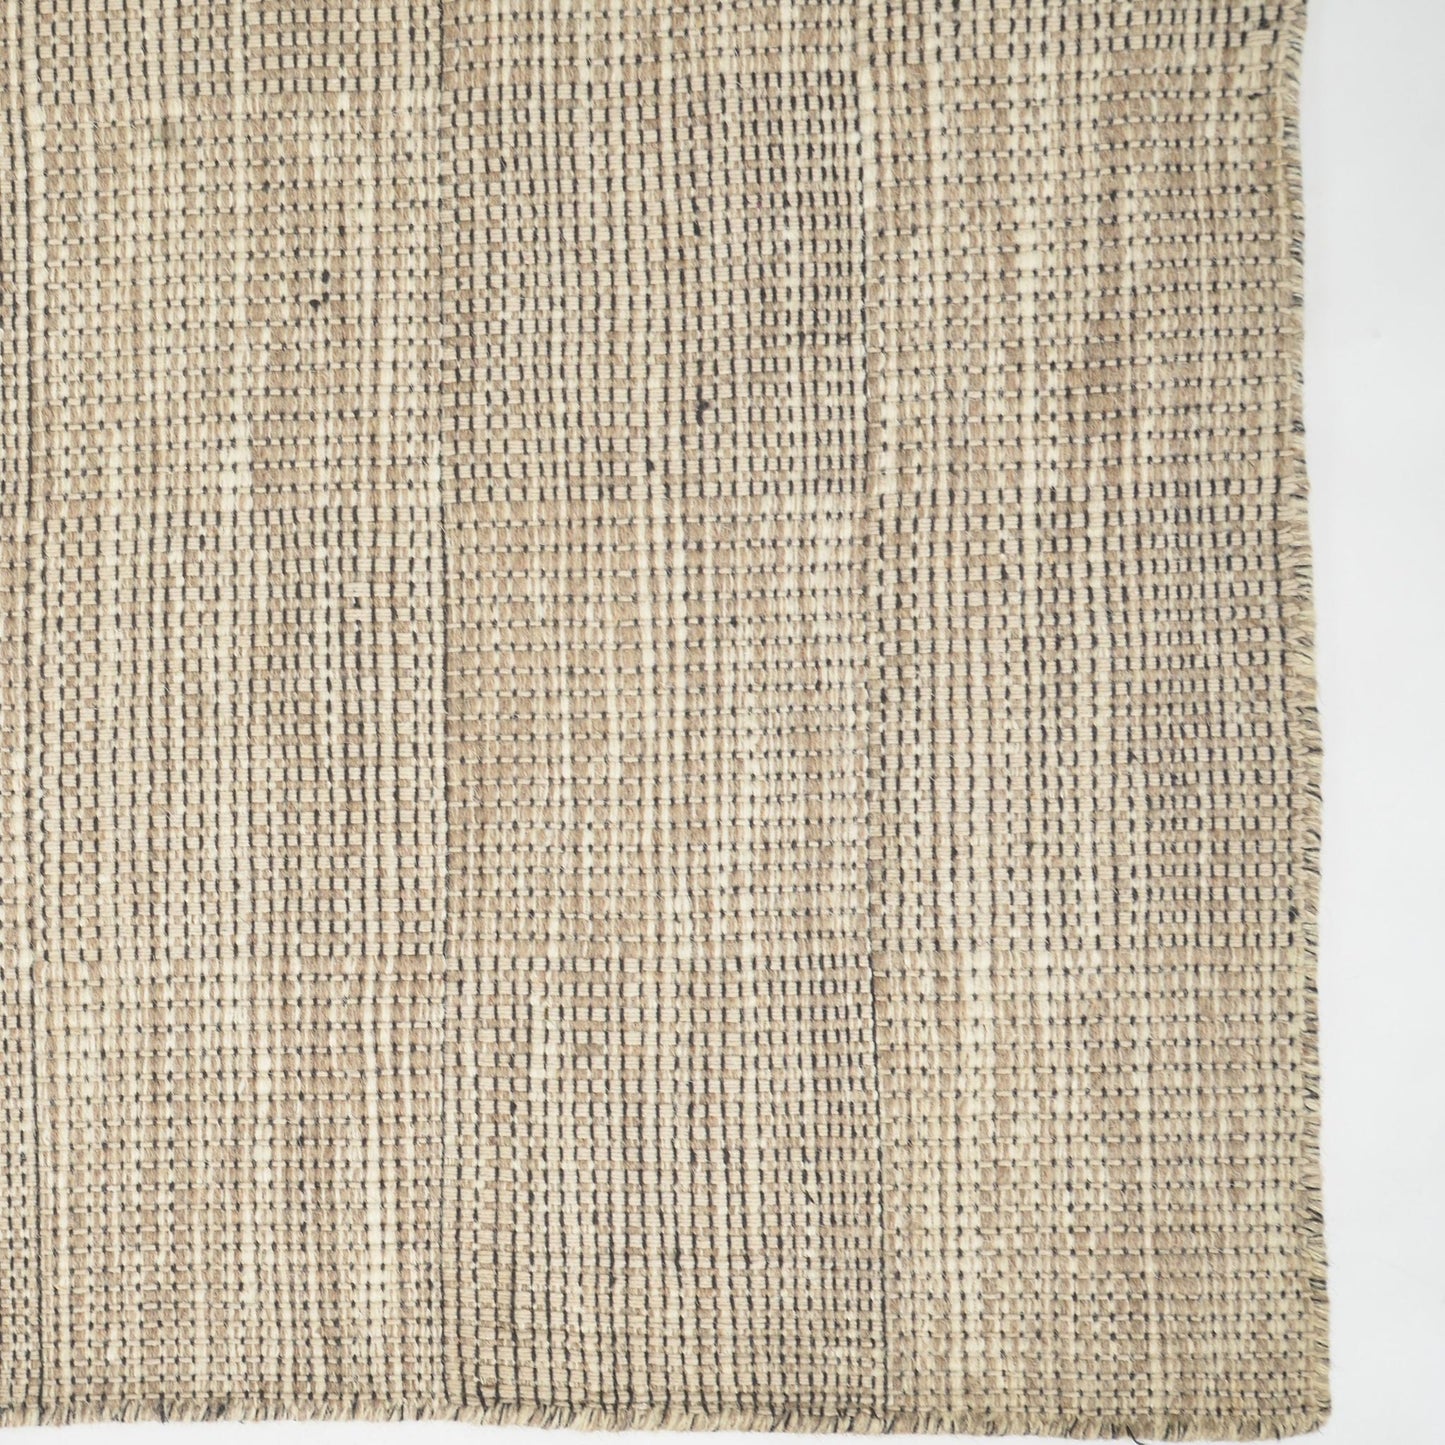 Check Stitch Handwoven Wool Cotton Rug 8' x 5'